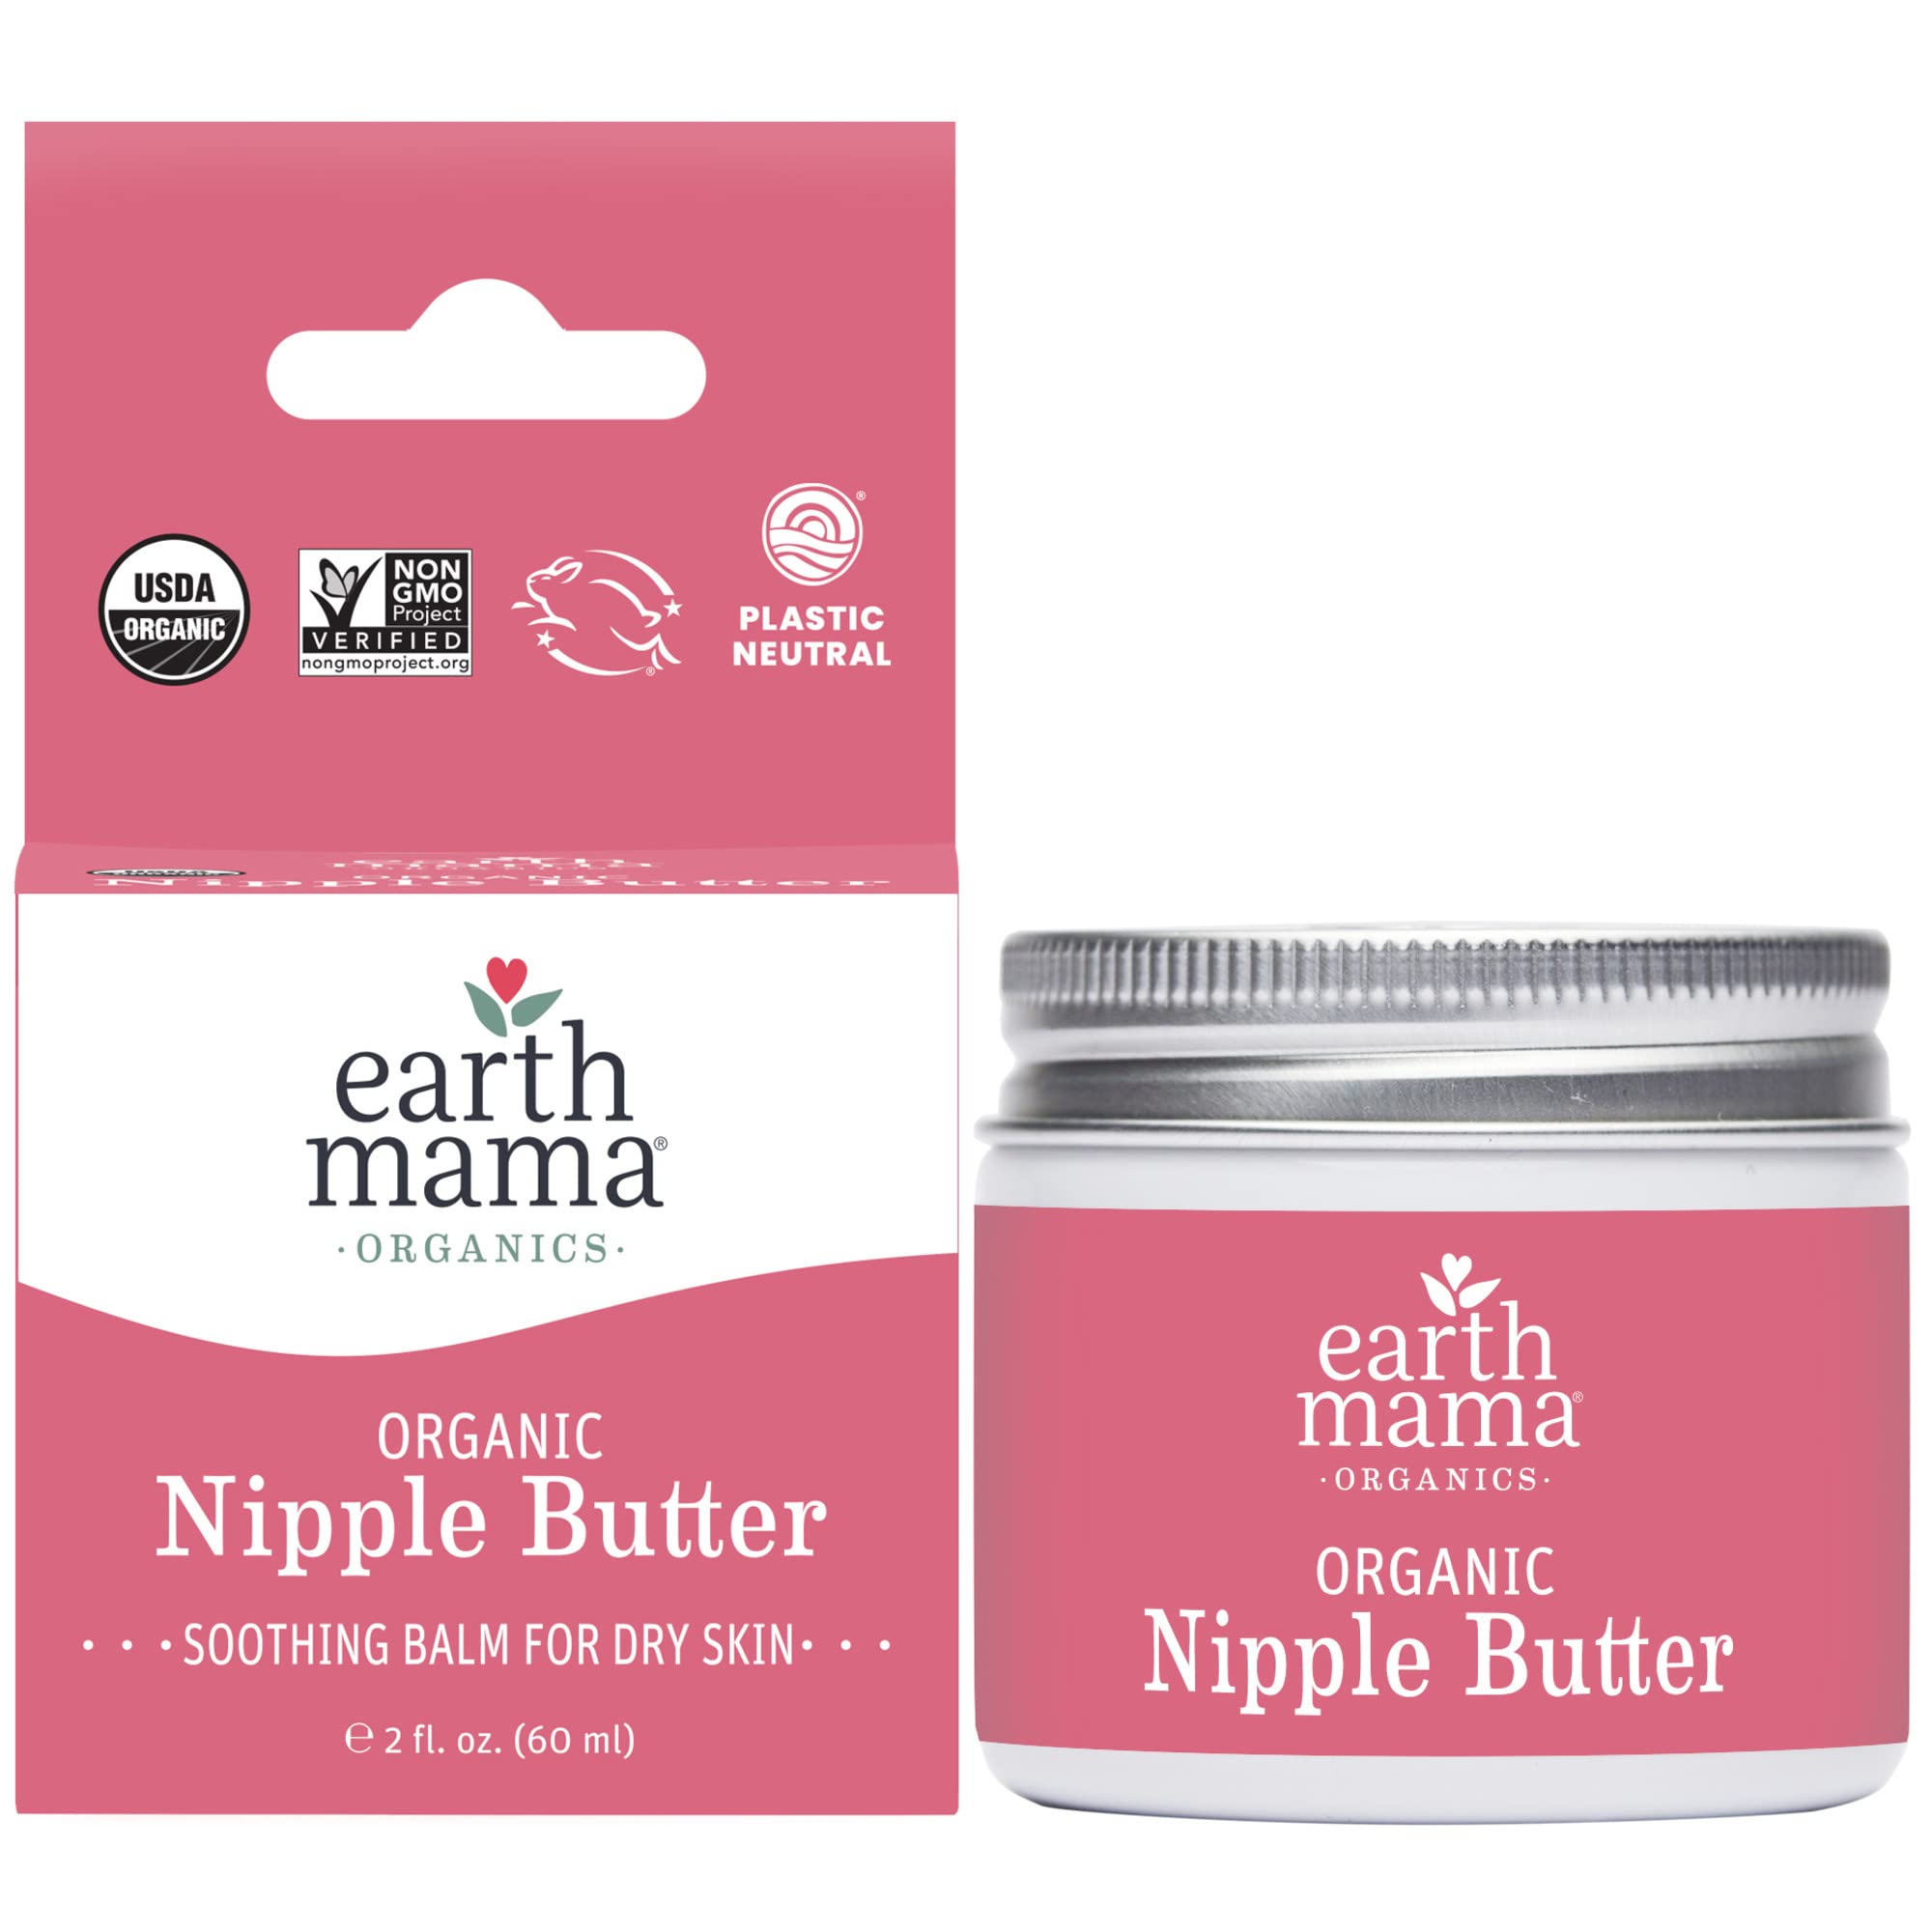 100% Lanolin Free, Organic Nipple Crack Nipple Cream for Breastfeeding,  Nursing Balm for New Mamas – Tiny Human Supply Co